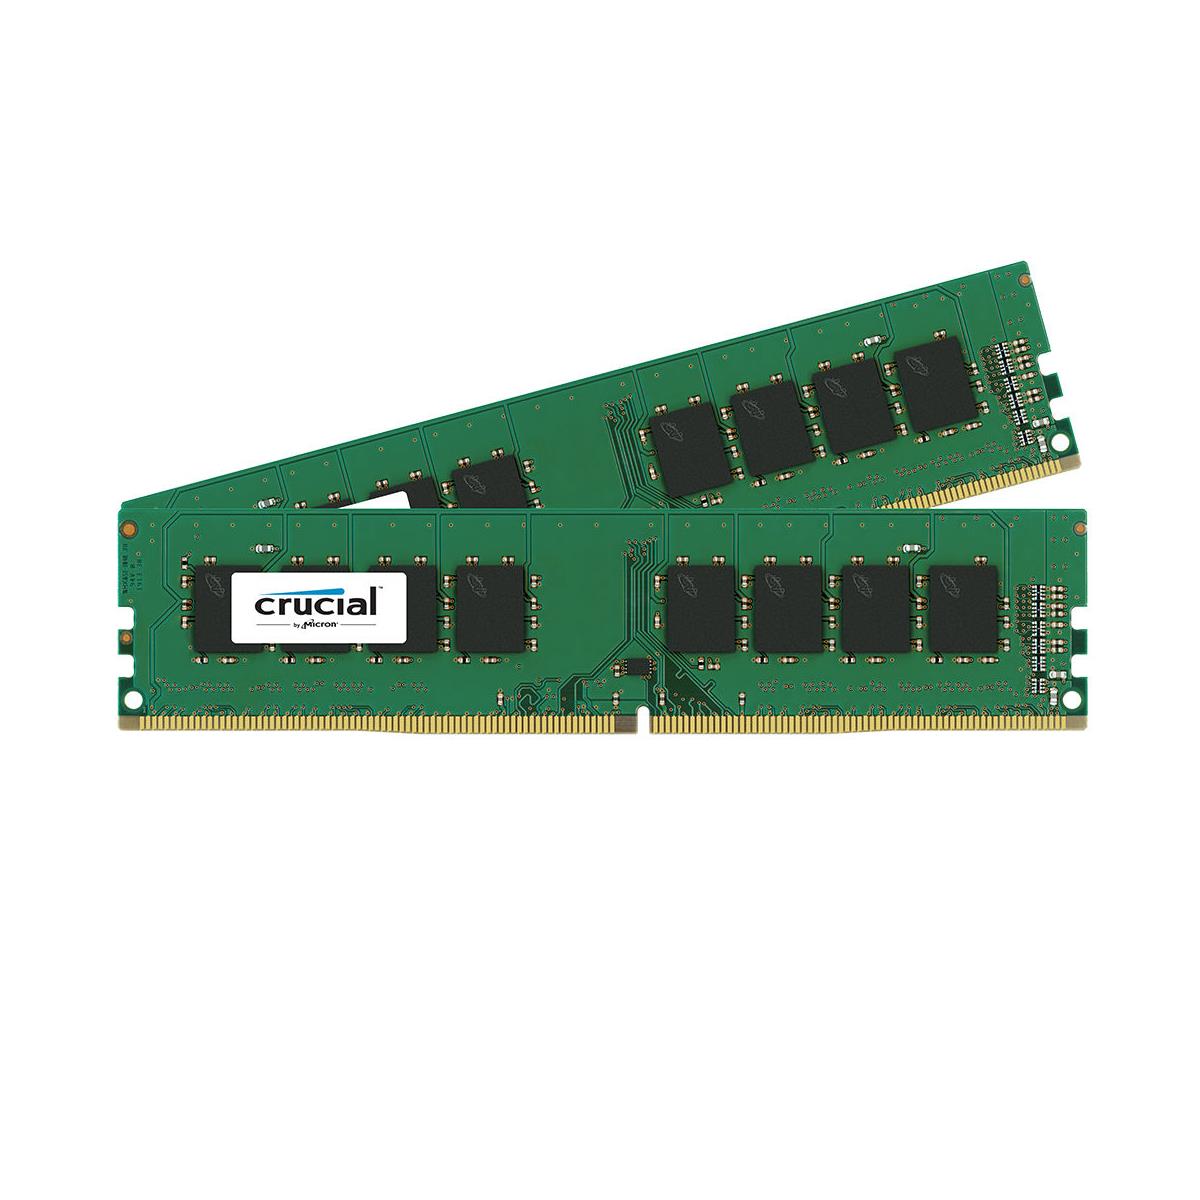 Image of Crucial 32GB (2x 16GB) 288-Pin UDIMM DDR4 (PC4-19200) Module Kit